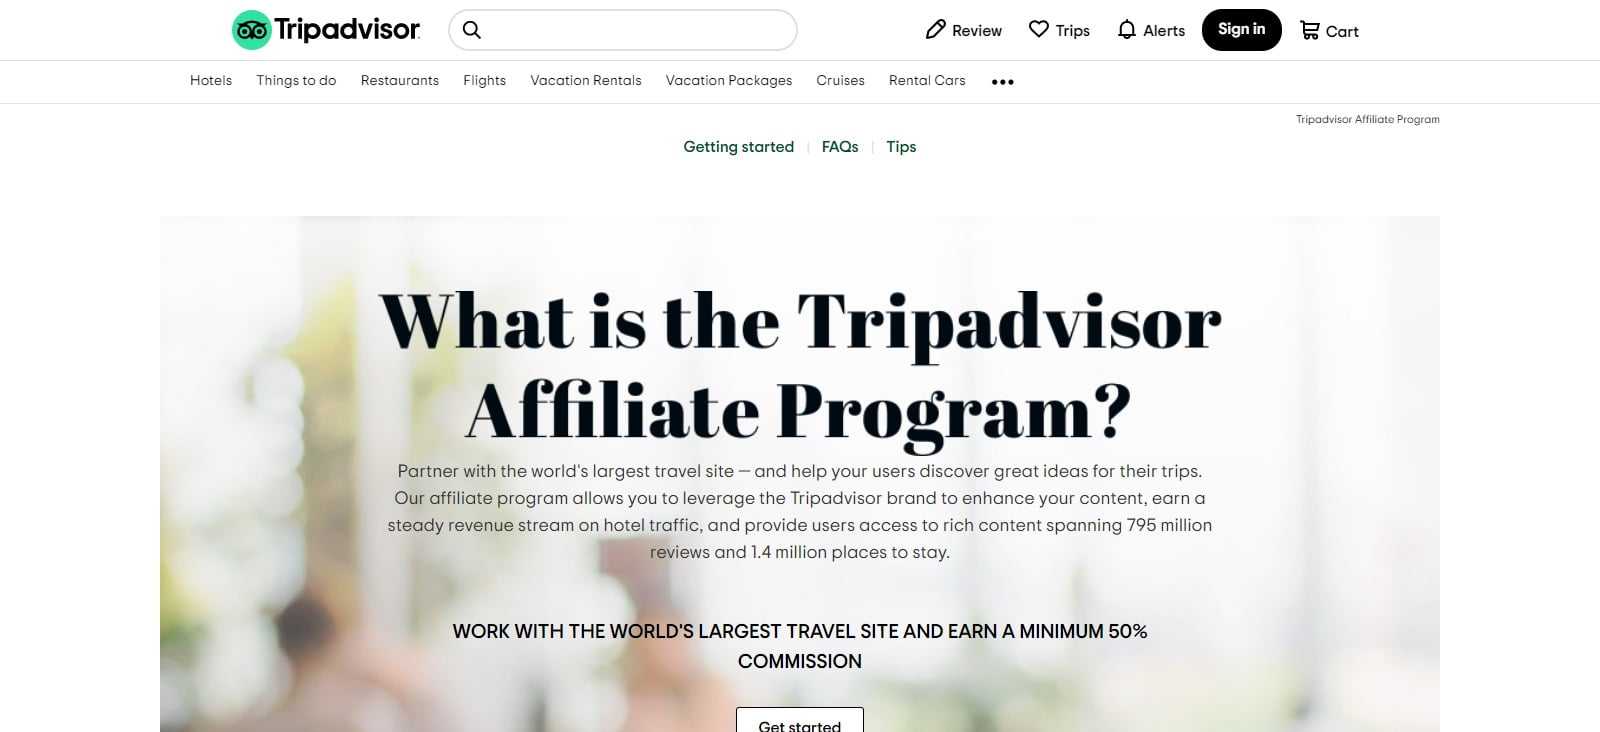 TripAdvisor Affiliates Program Review: Earn Up To 50% - 80% Commission